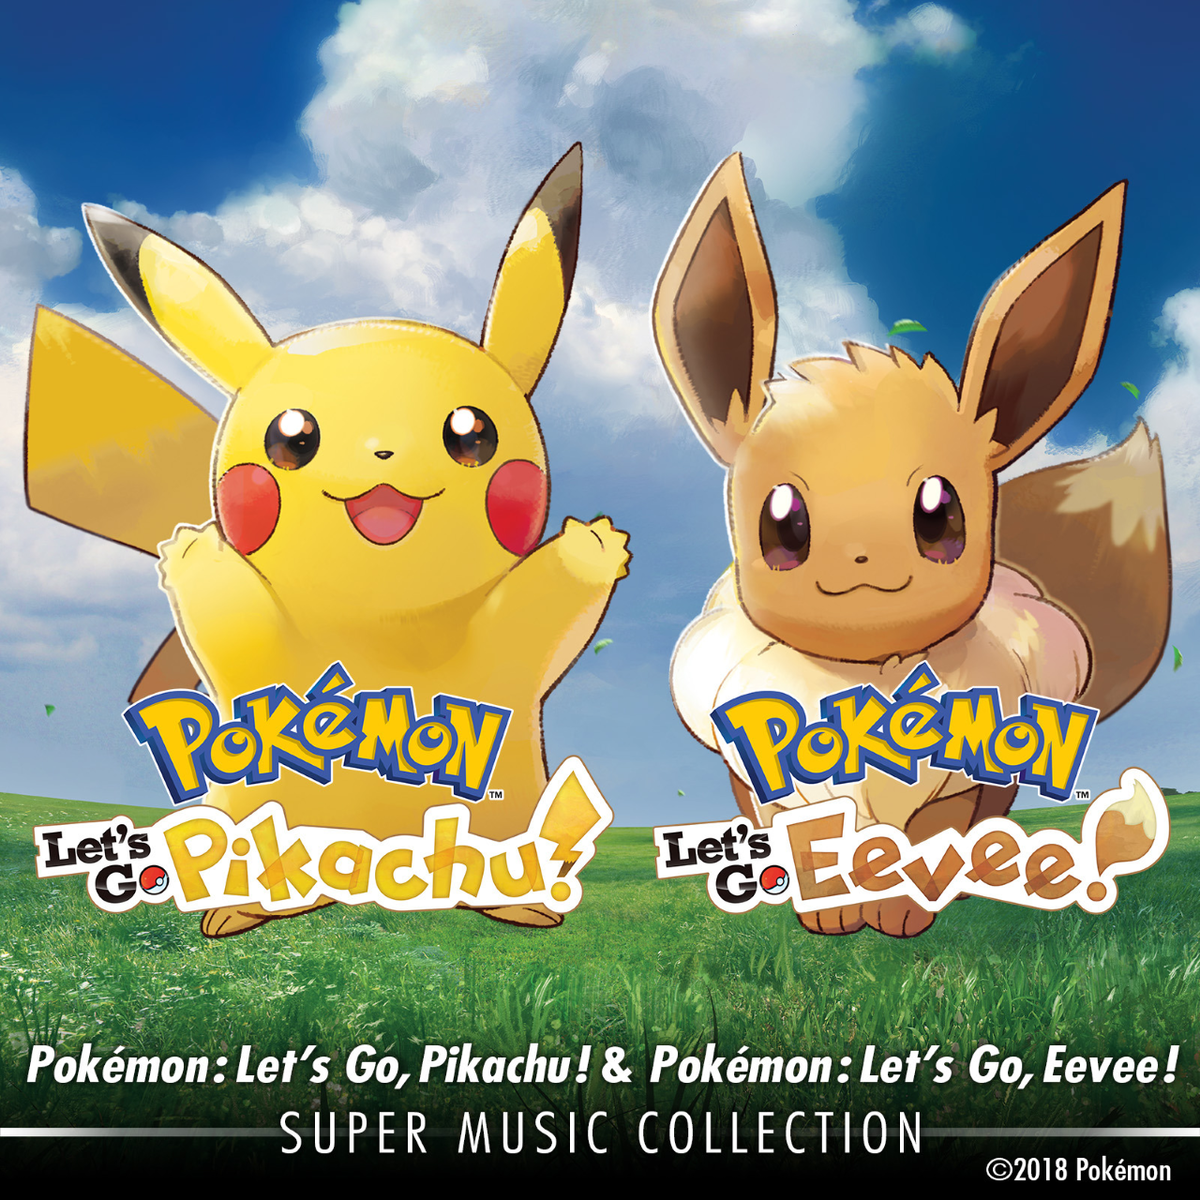 Pokemon Let S Go Pikachu Pokemon Let S Go Eevee Super Music Collection Bulbapedia The Community Driven Pokemon Encyclopedia